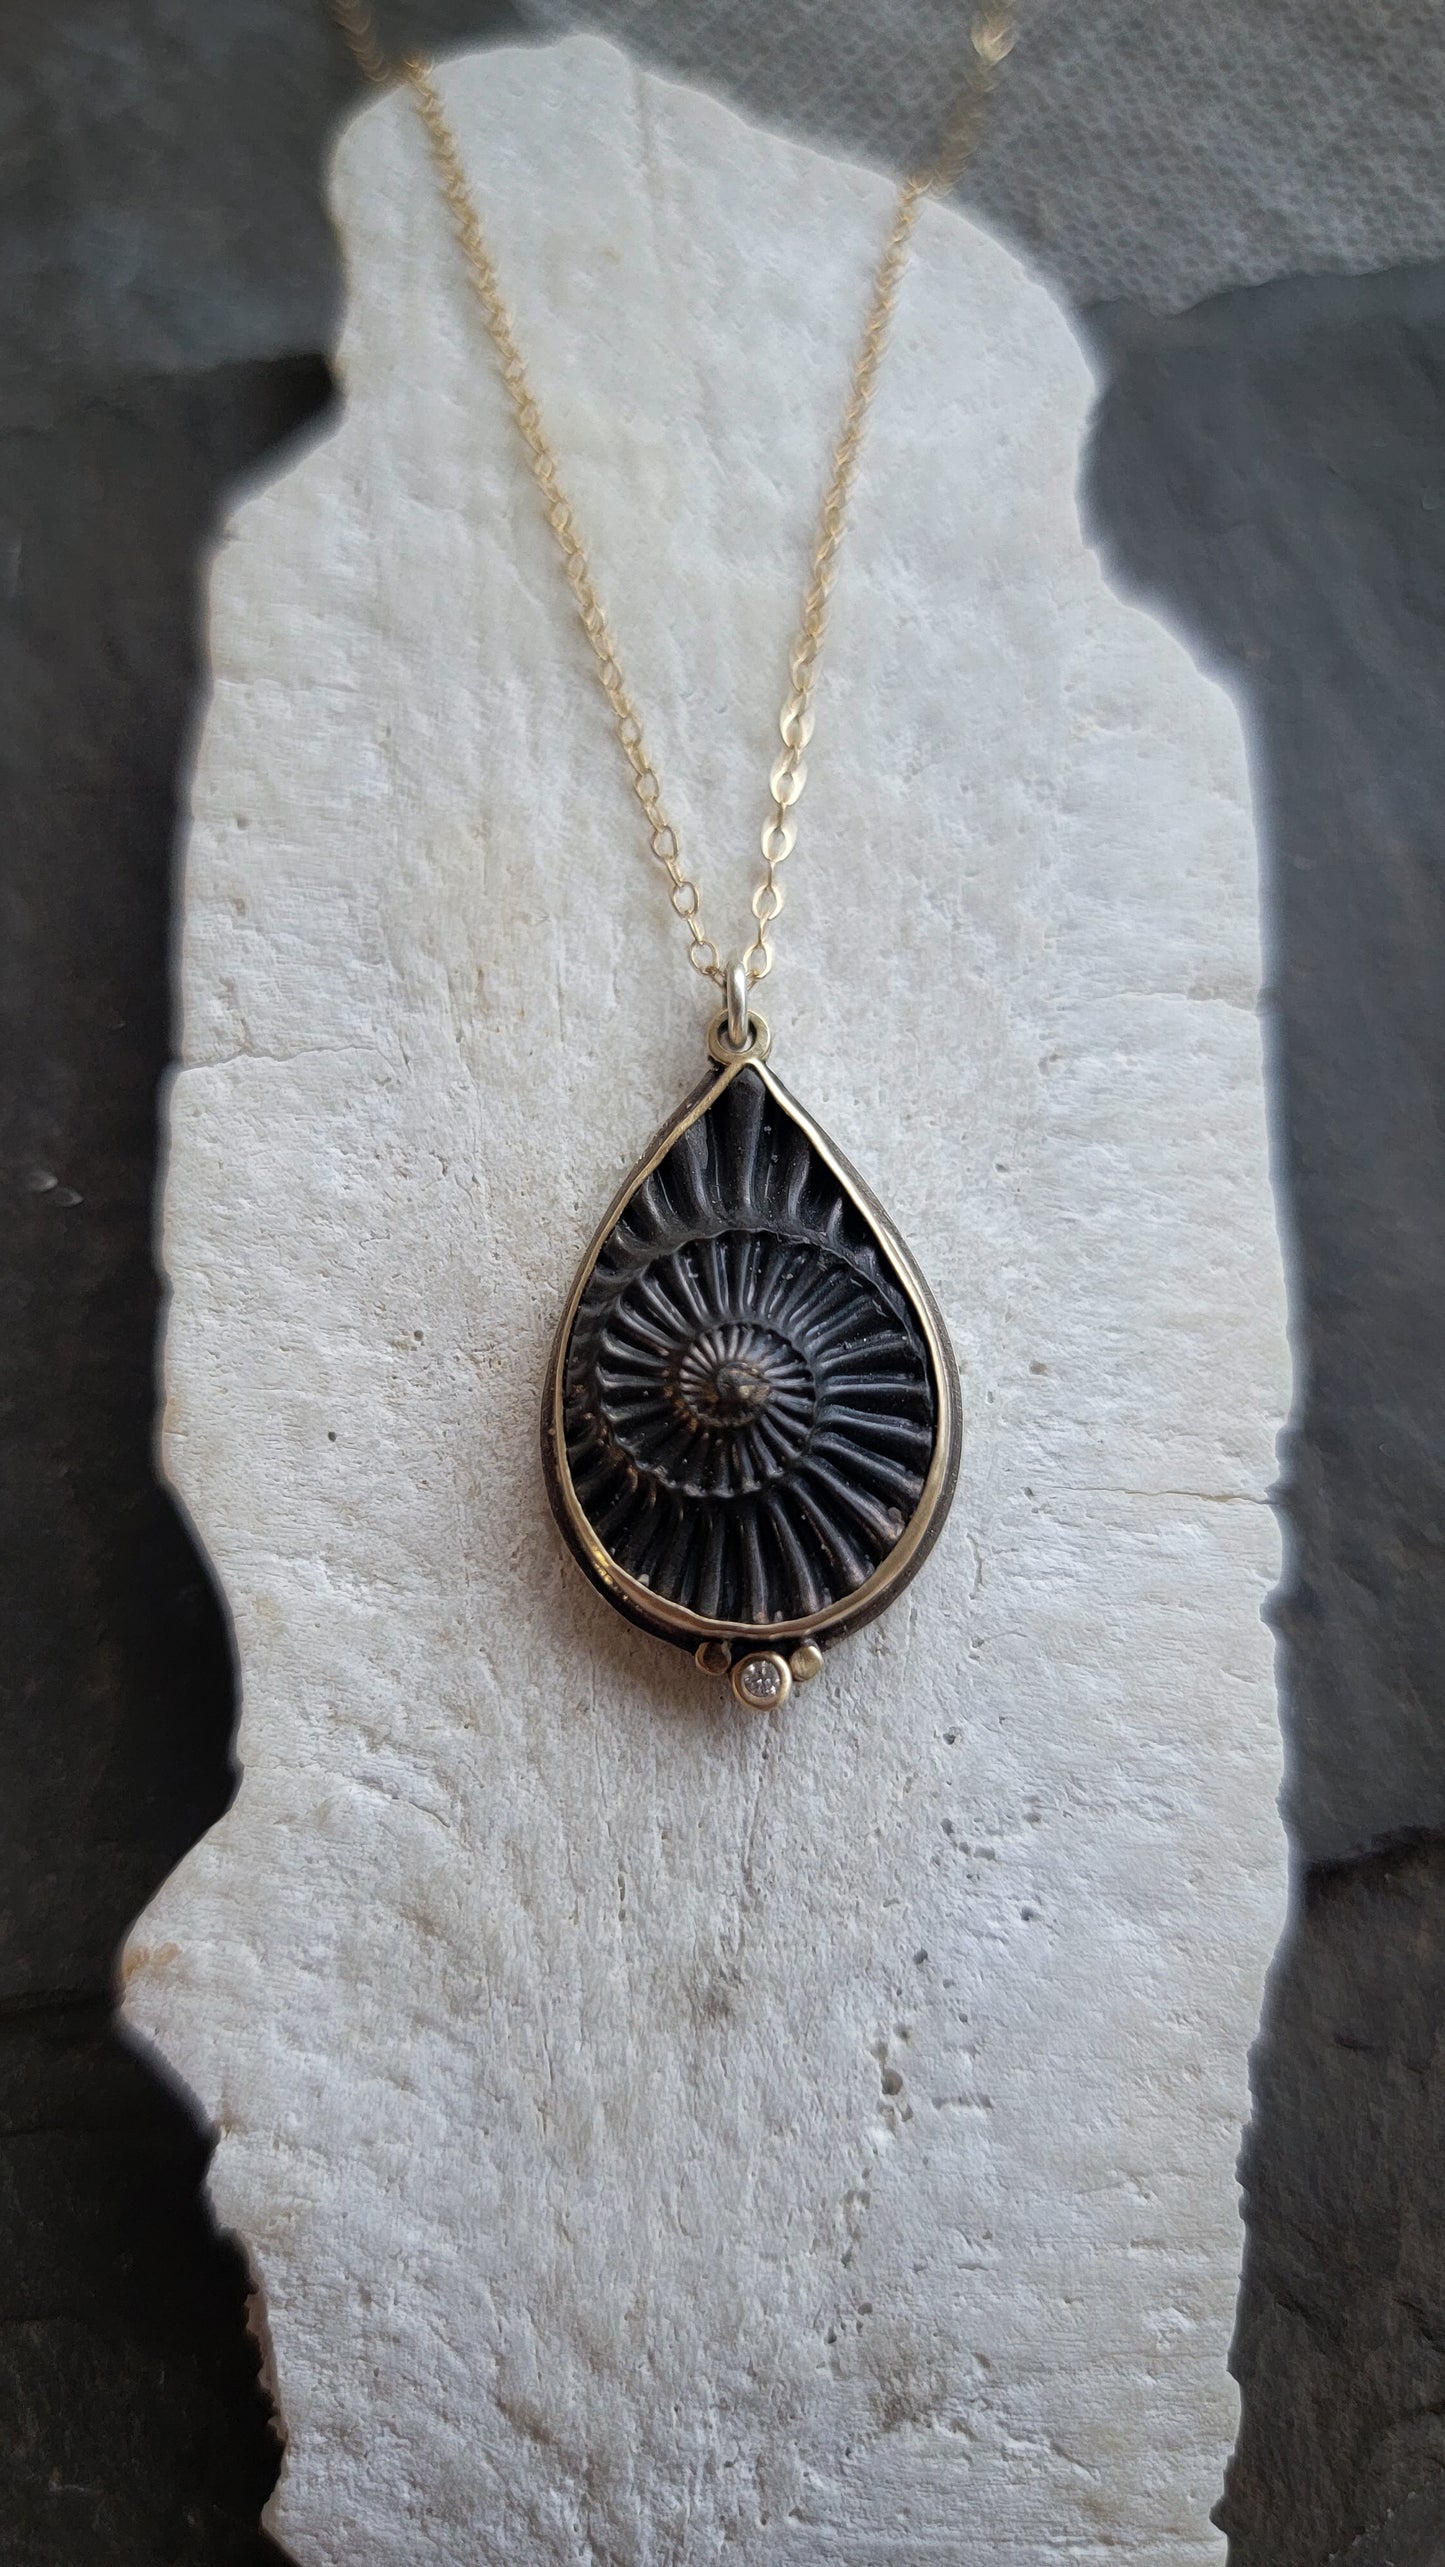 Pyritized Ammonite and Diamond Necklace